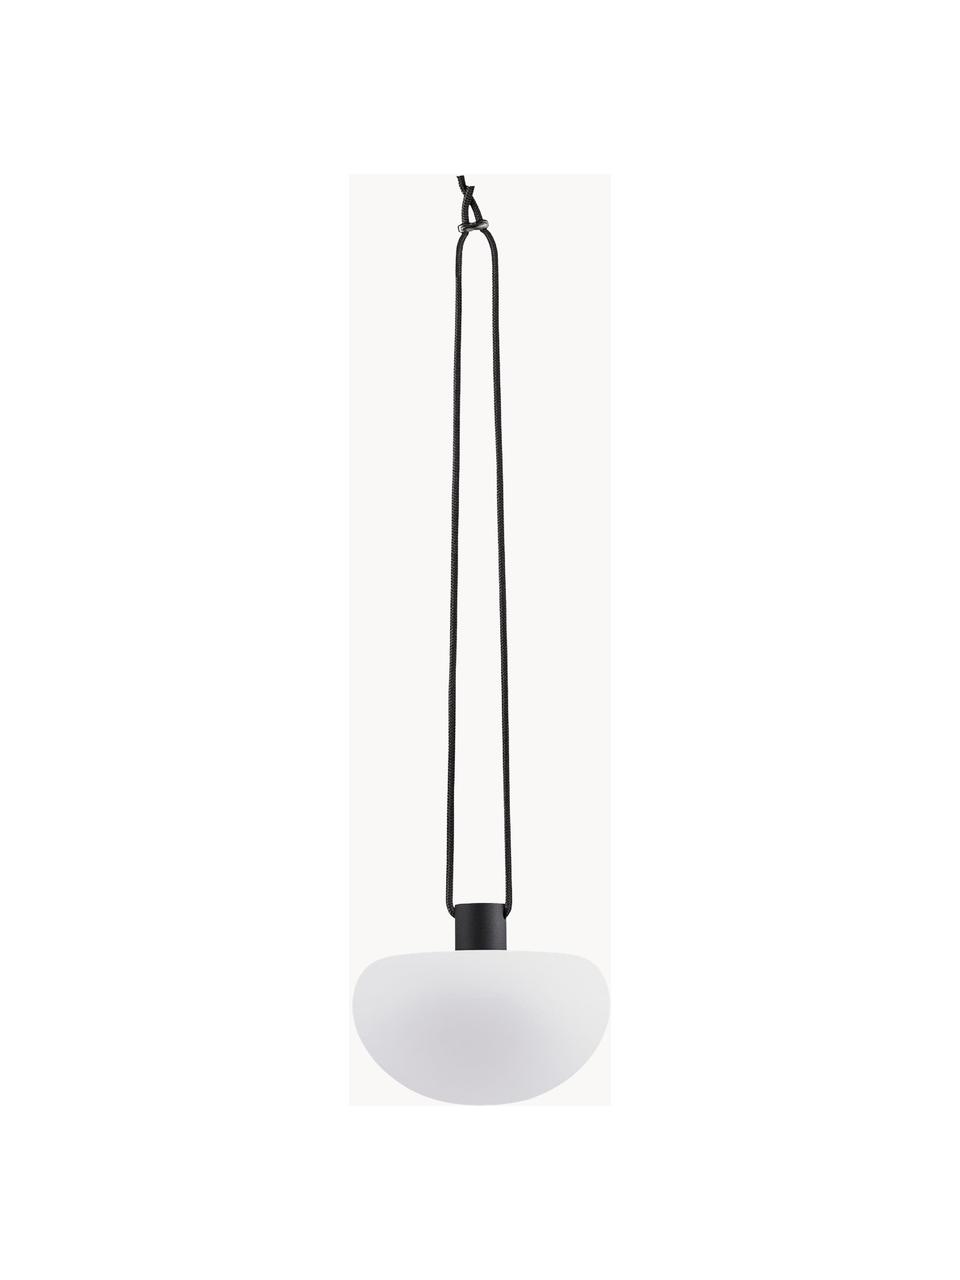 Lampada a sospensione portatile con luce regolabile Sponge, Paralume: plastica, Bianco, nero, Ø 20 x Alt. 16 cm